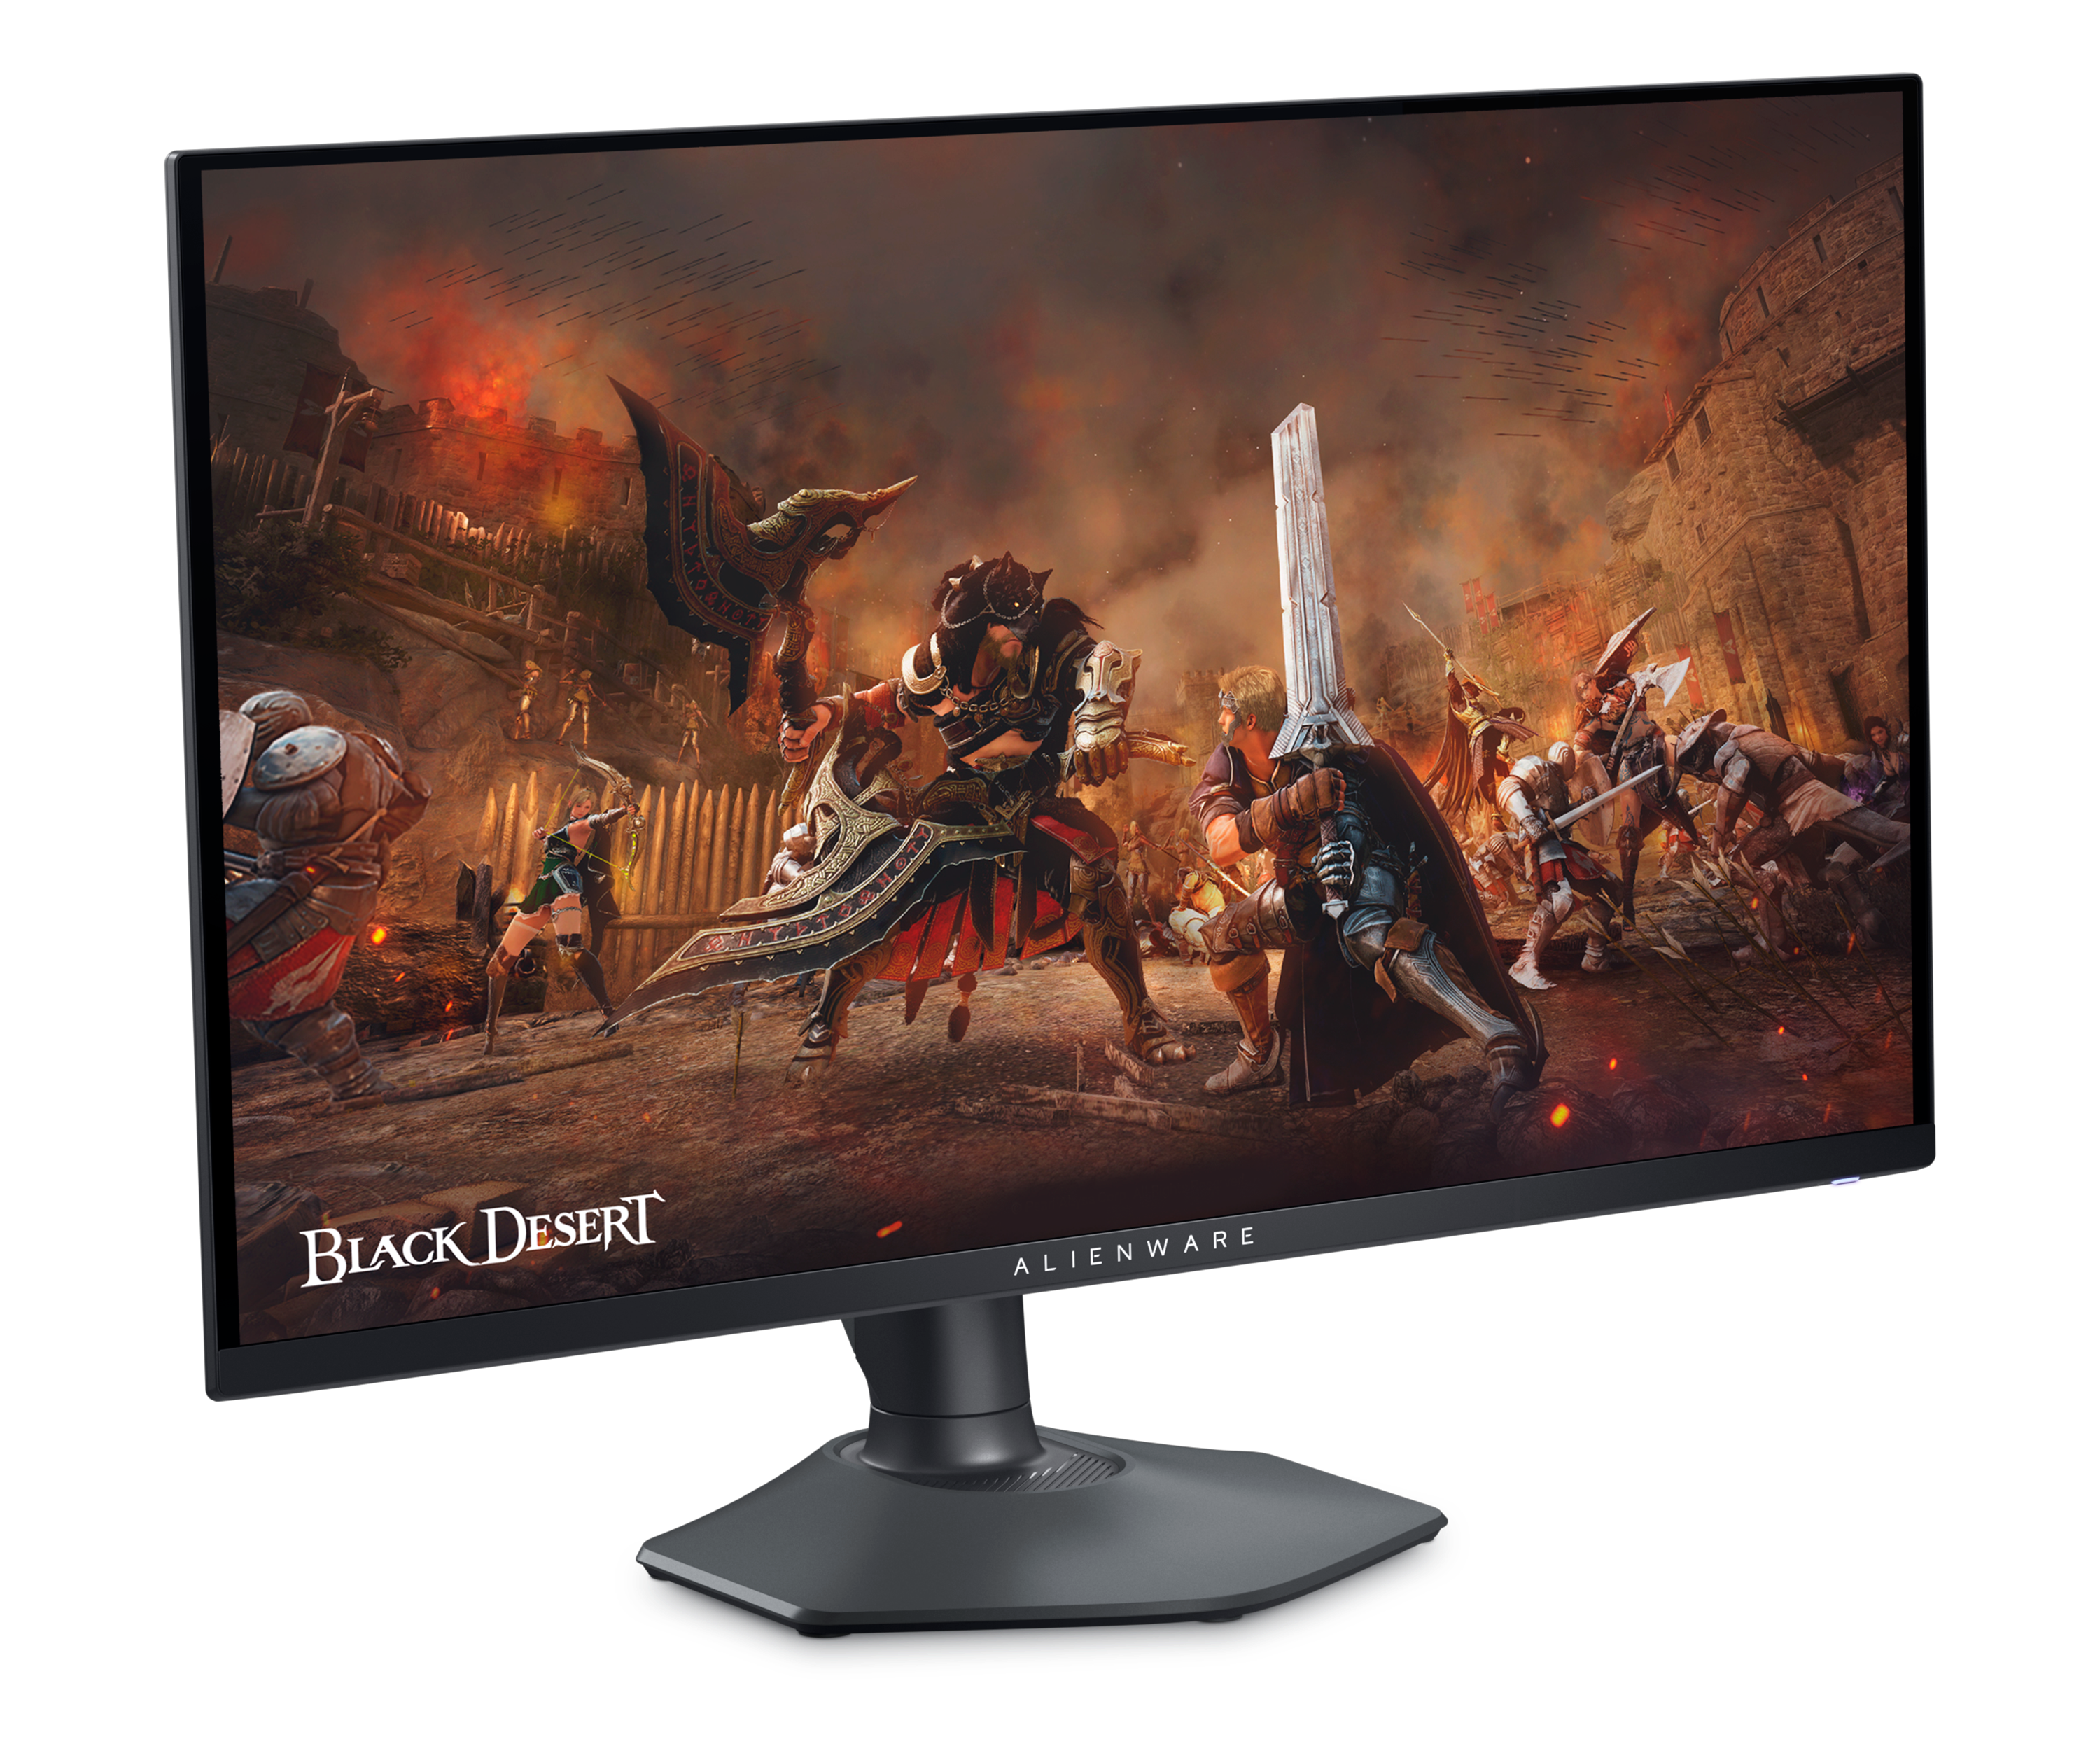 Dell AW2725DF 遊戲專用顯示器，螢幕上顯示黑色沙漠遊戲畫面。